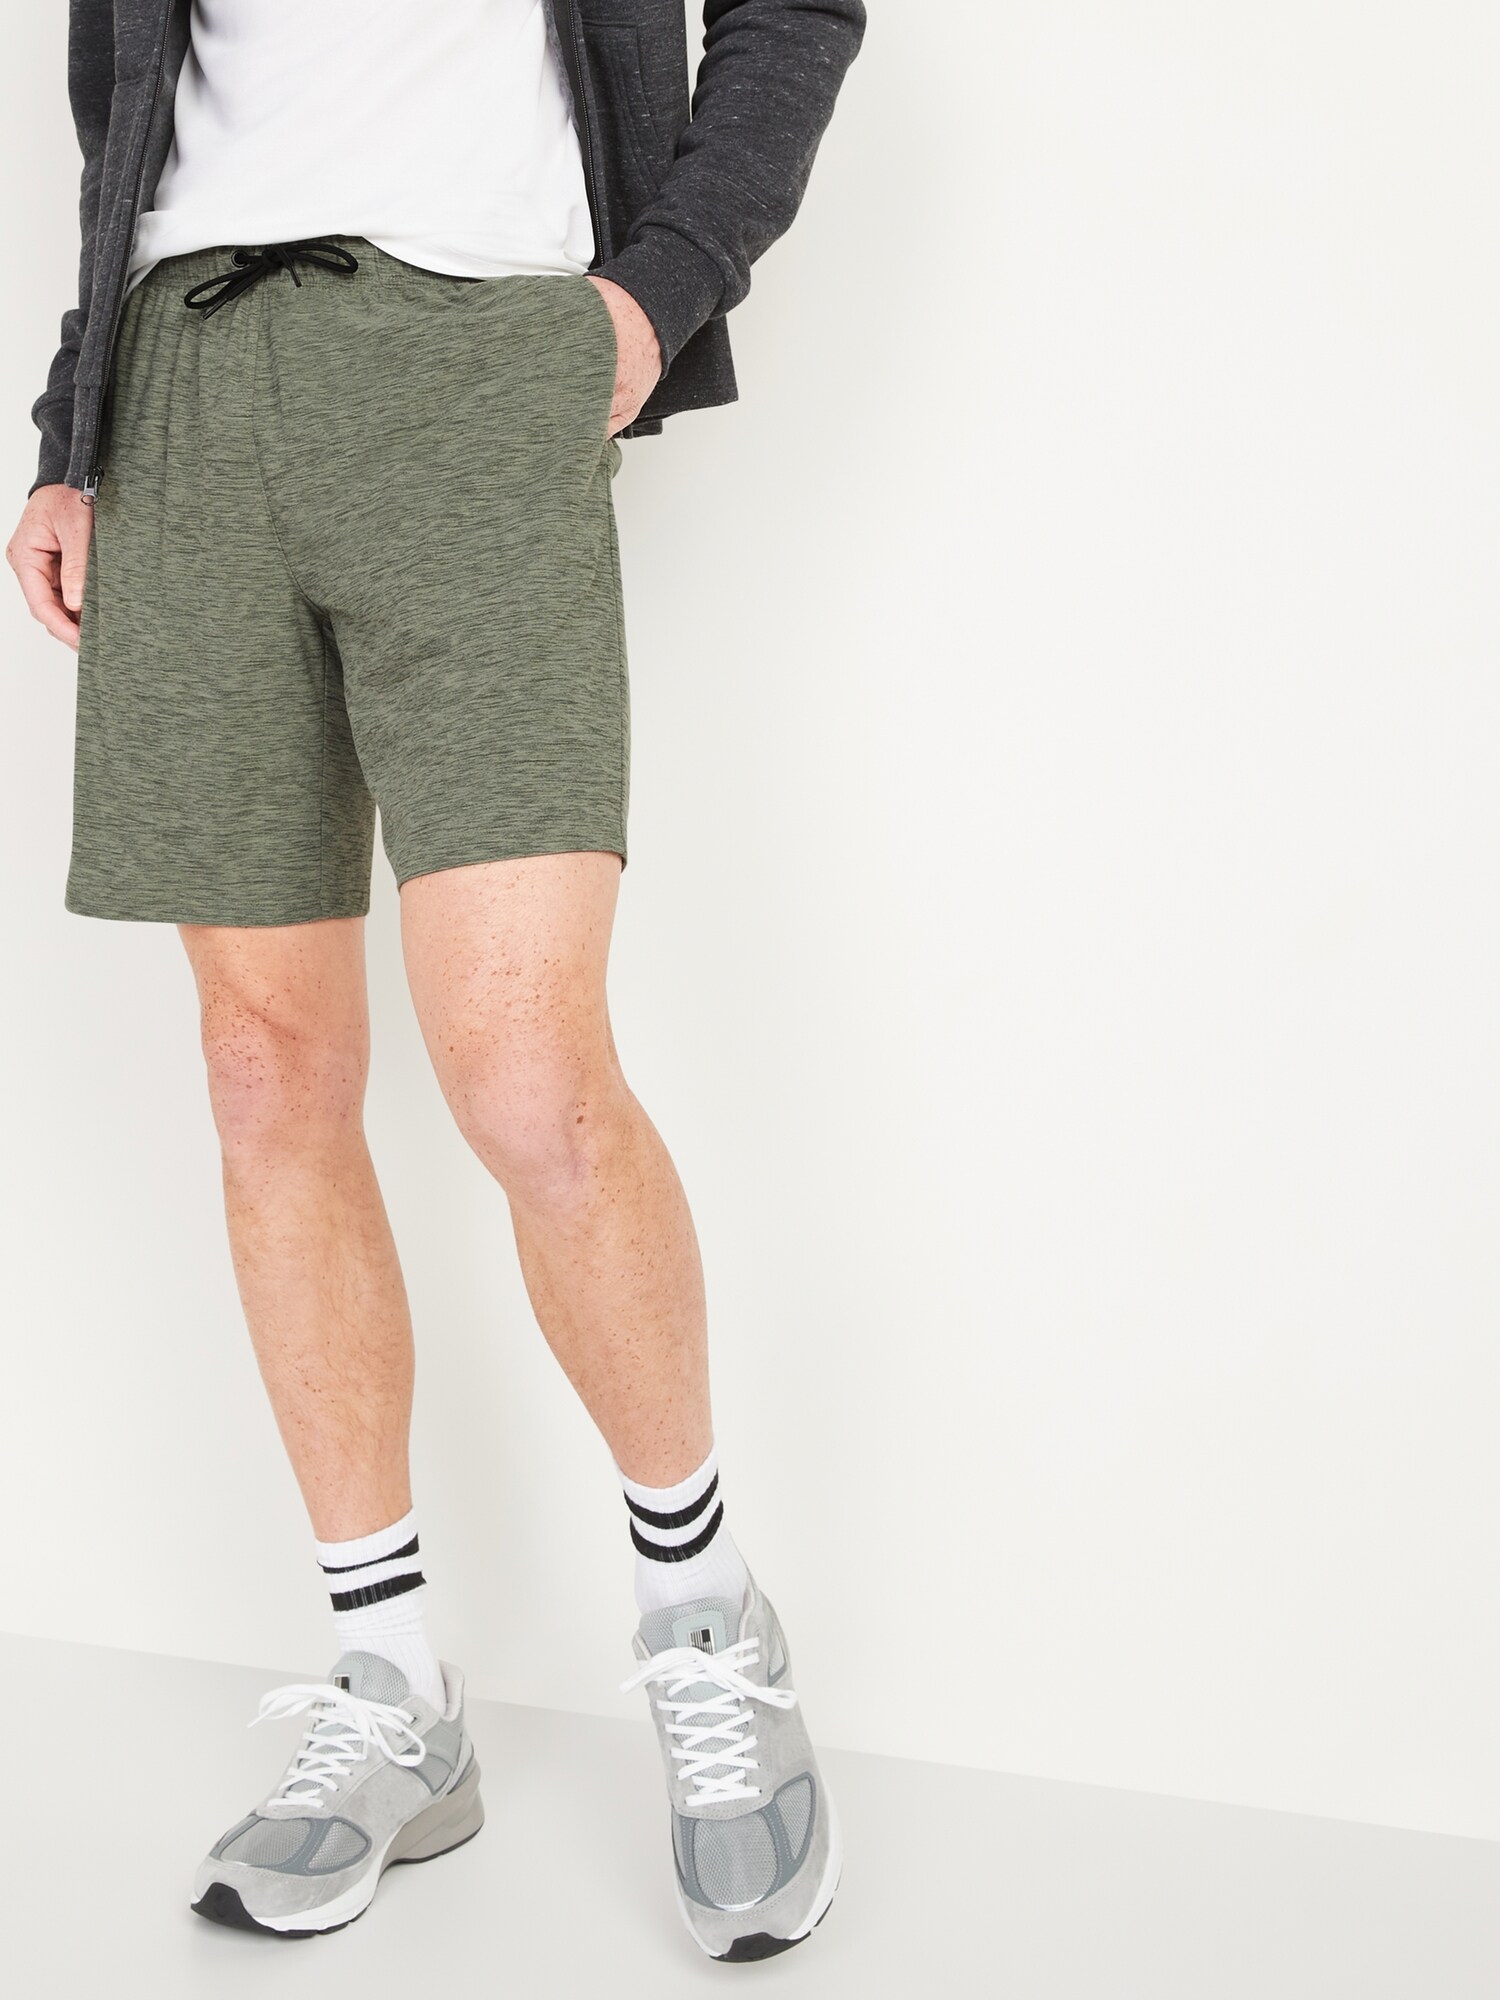 Breathe ON Shorts for Men - 9-inch inseam